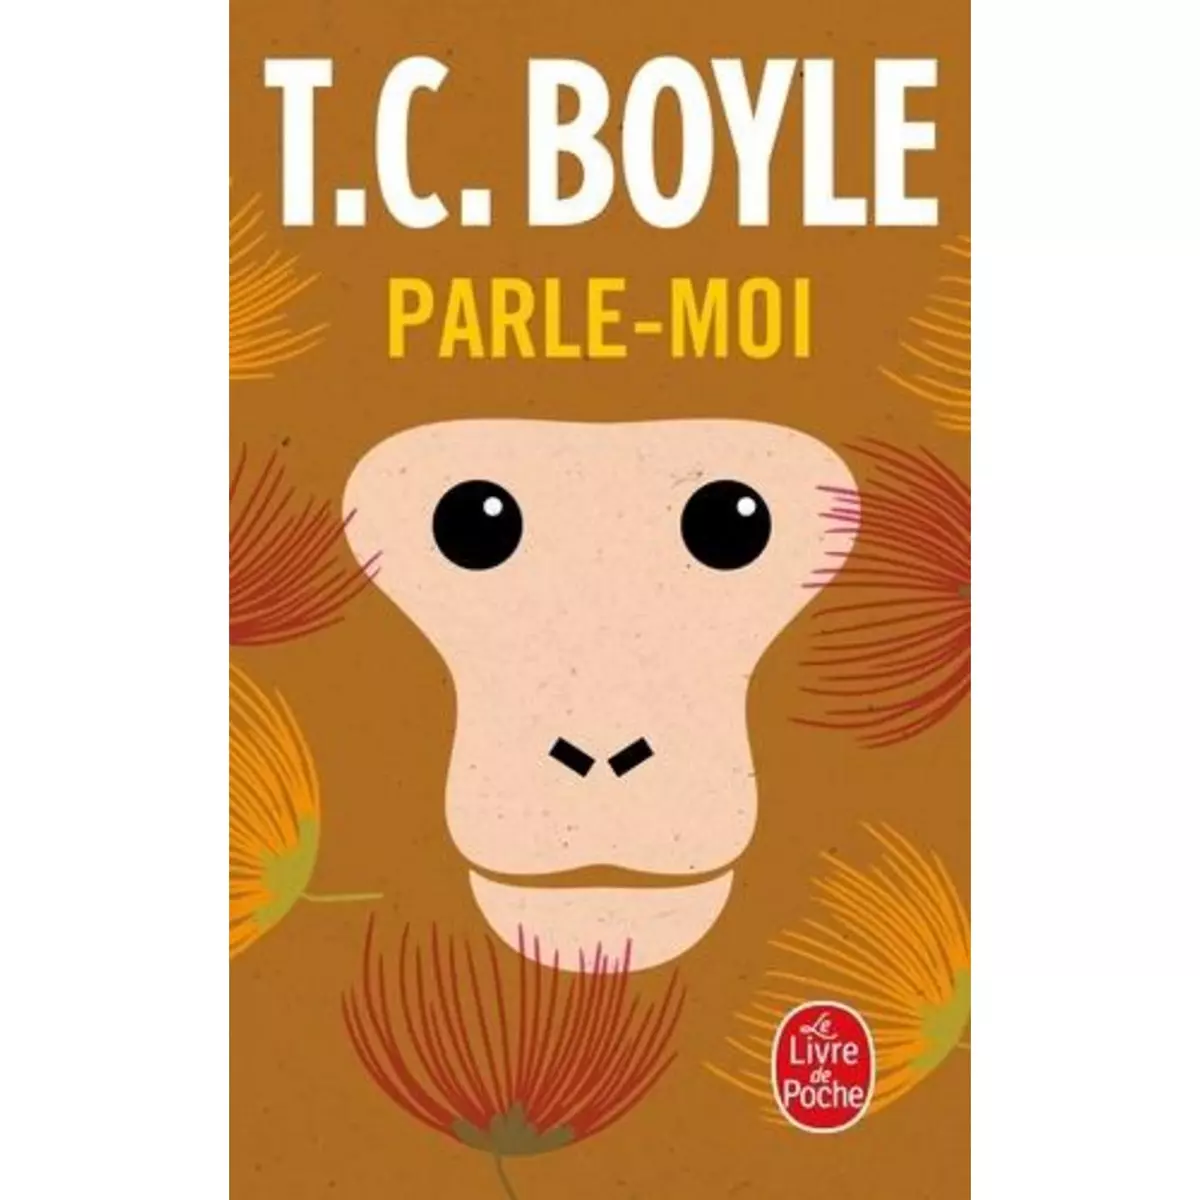  PARLE-MOI, Boyle T. Coraghessan